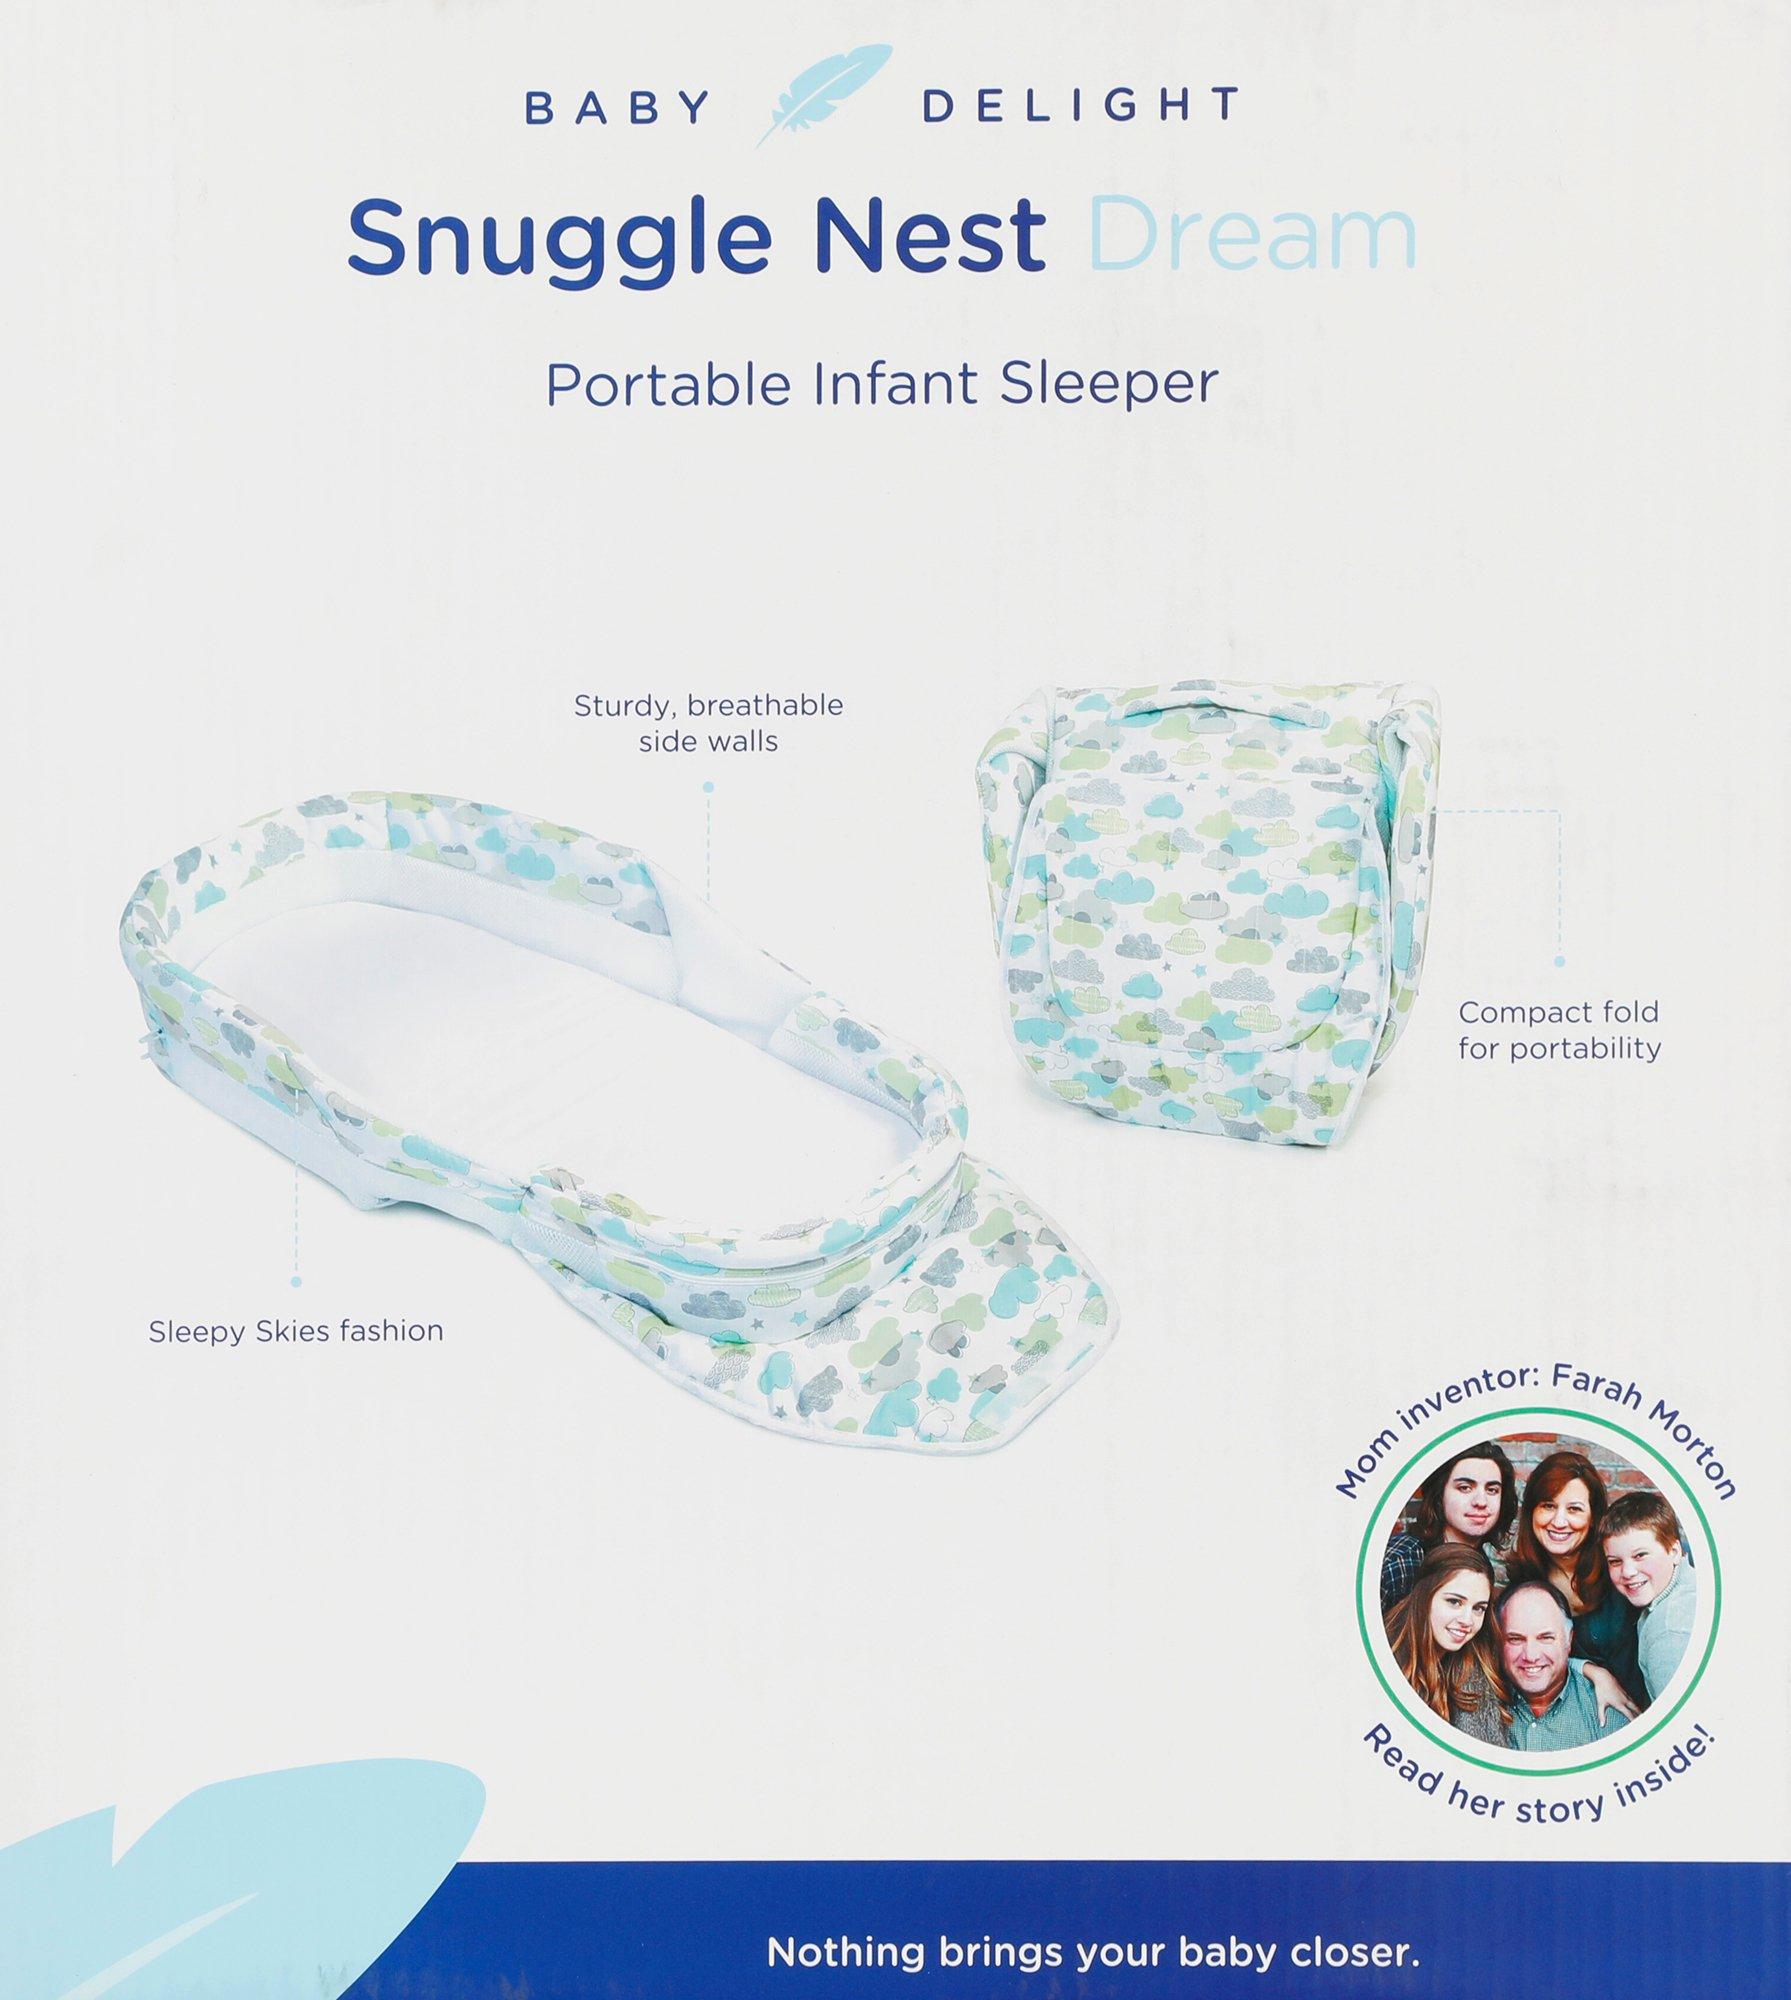 snuggle nest dream baby delight